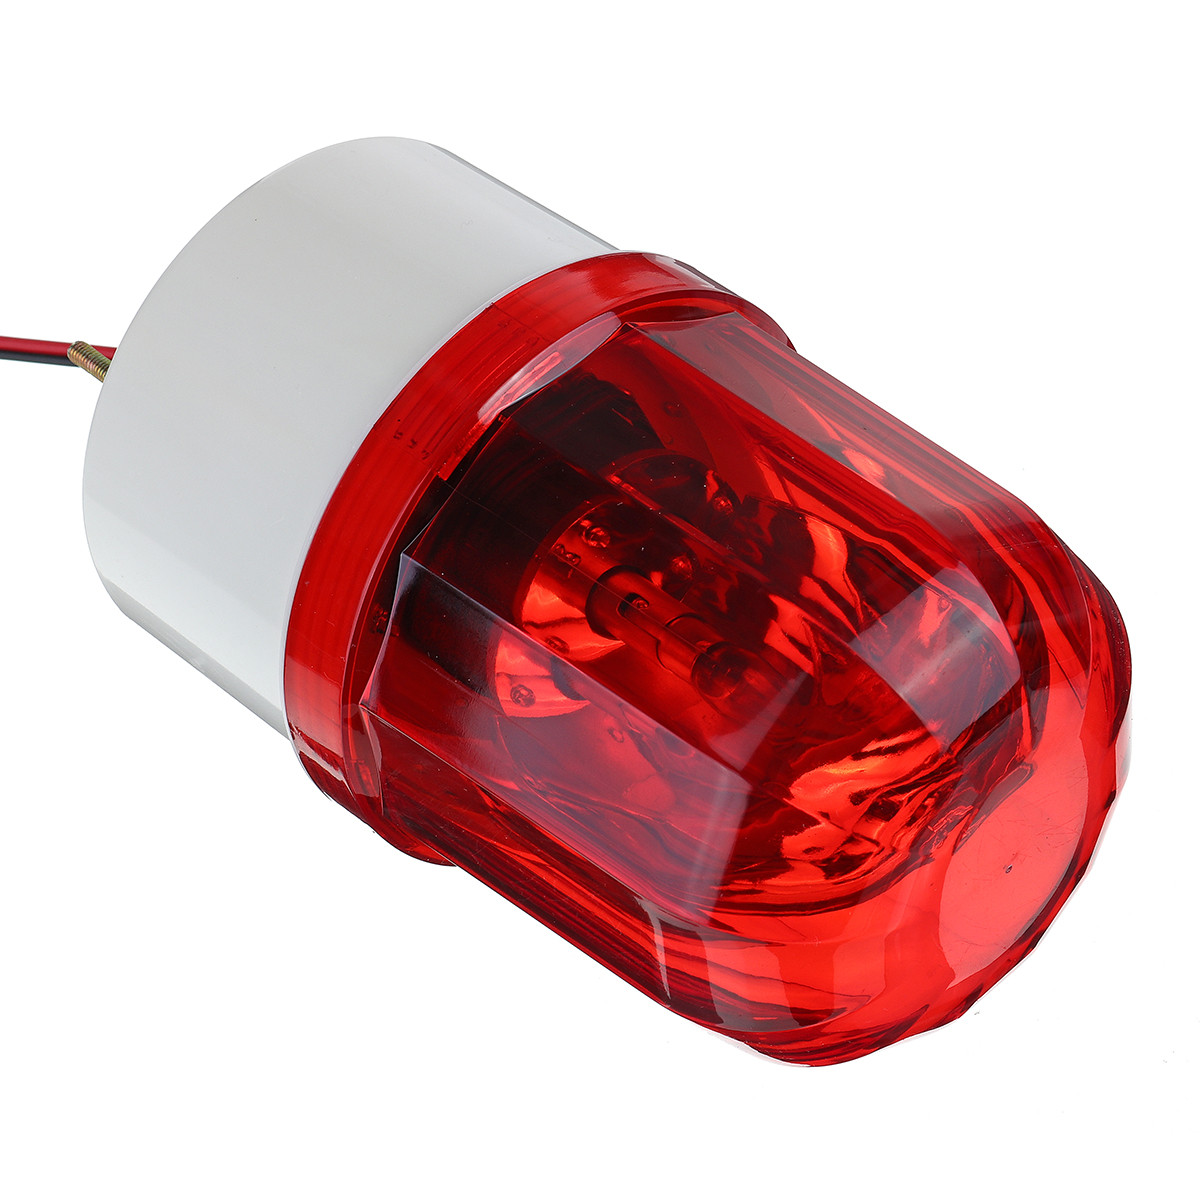 24V-Road-Traffic-Warning-Light-Beacon-LED-Emergency-Flashing-Recover-Safety-1766636-7